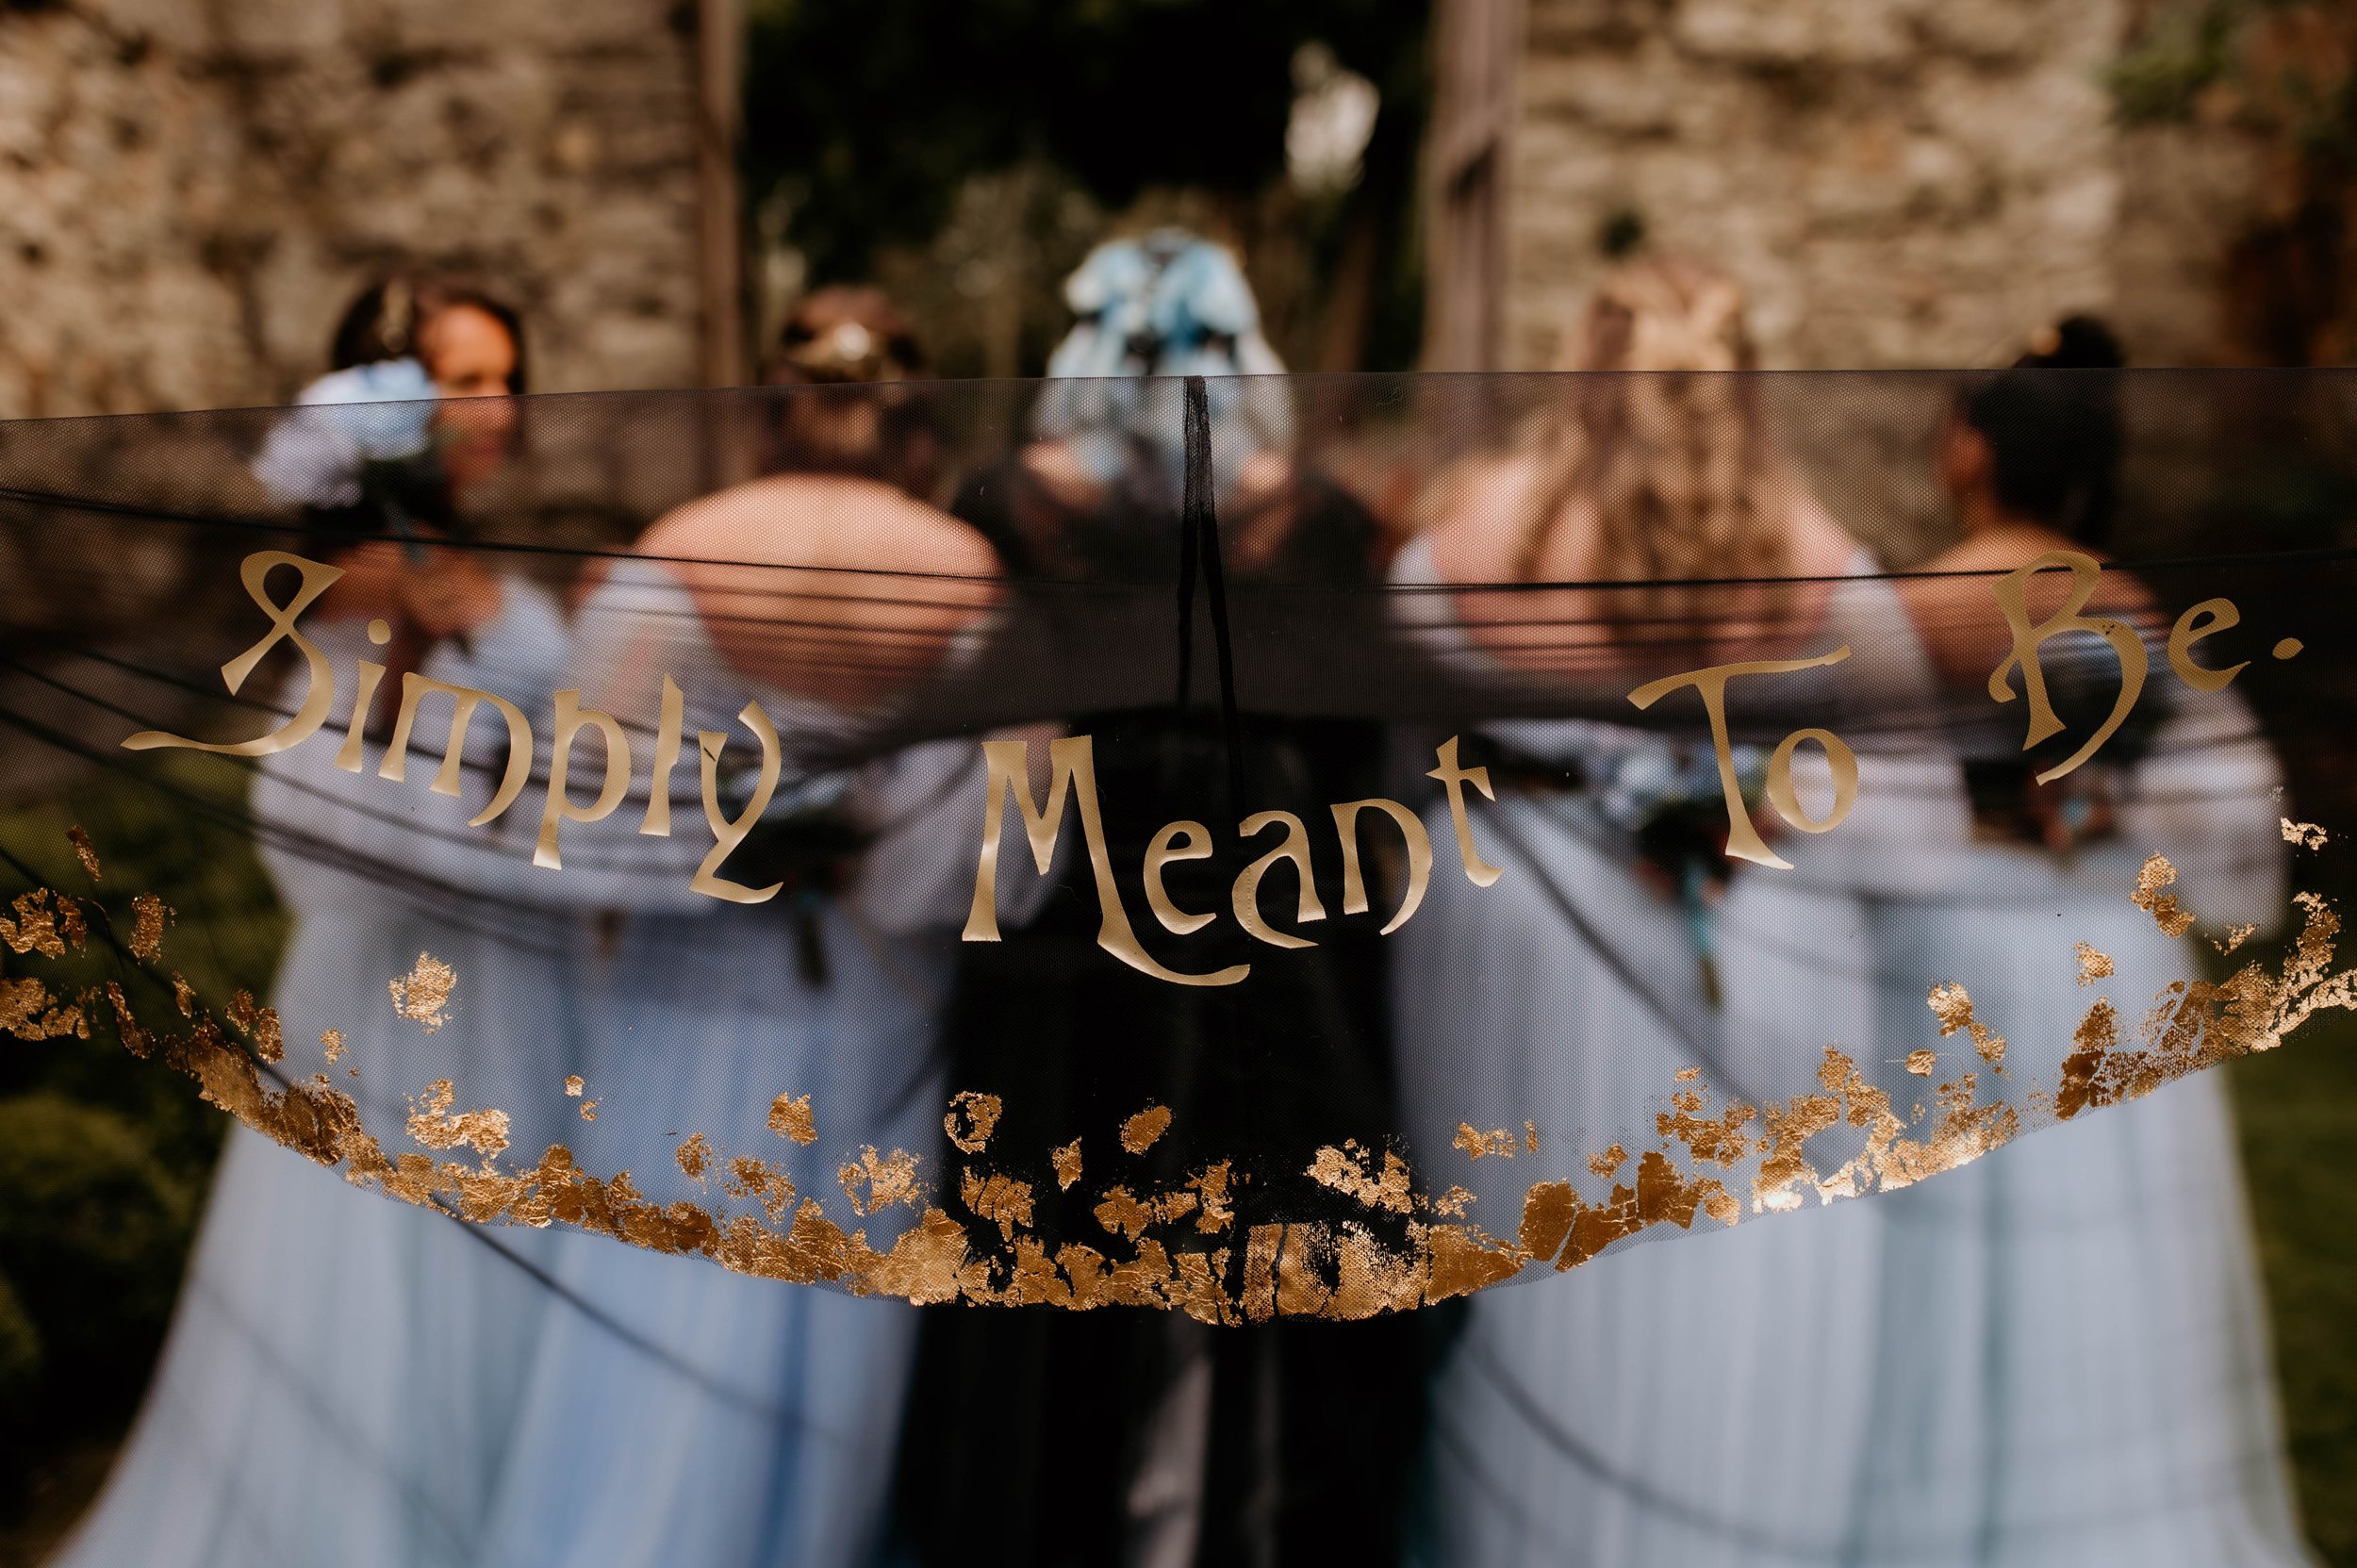 Legend Bridal Gothic Steampunk Wedding Portraits Simply Meant to Be veil.jpg